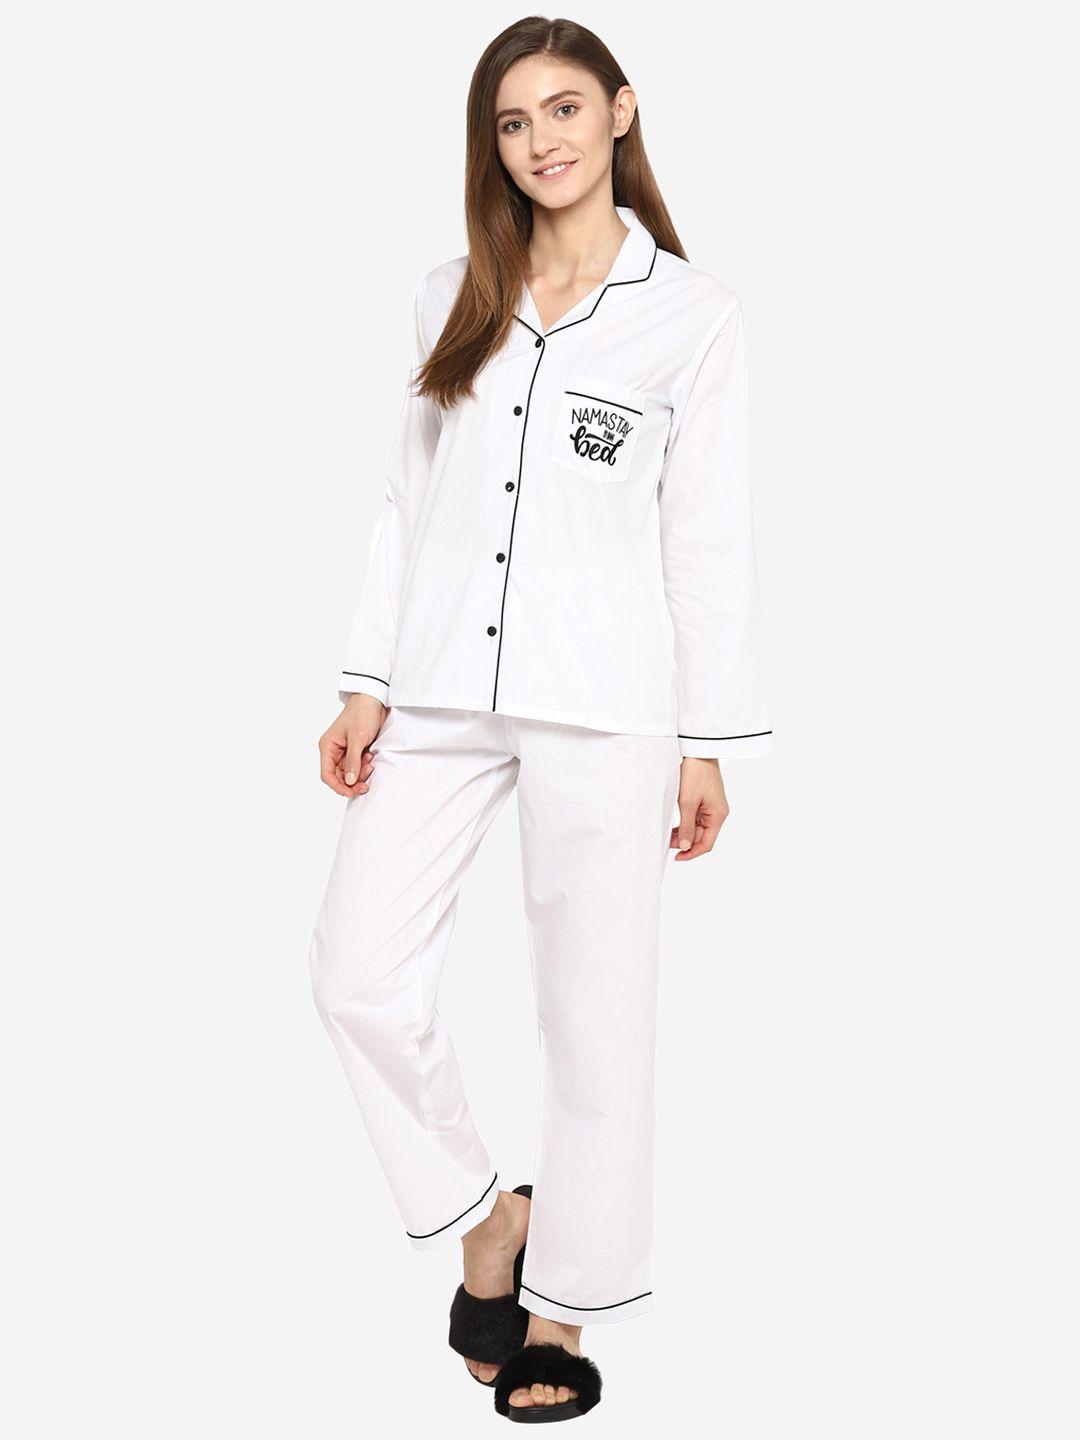 shopbloom-women-white-&-black-night-suit